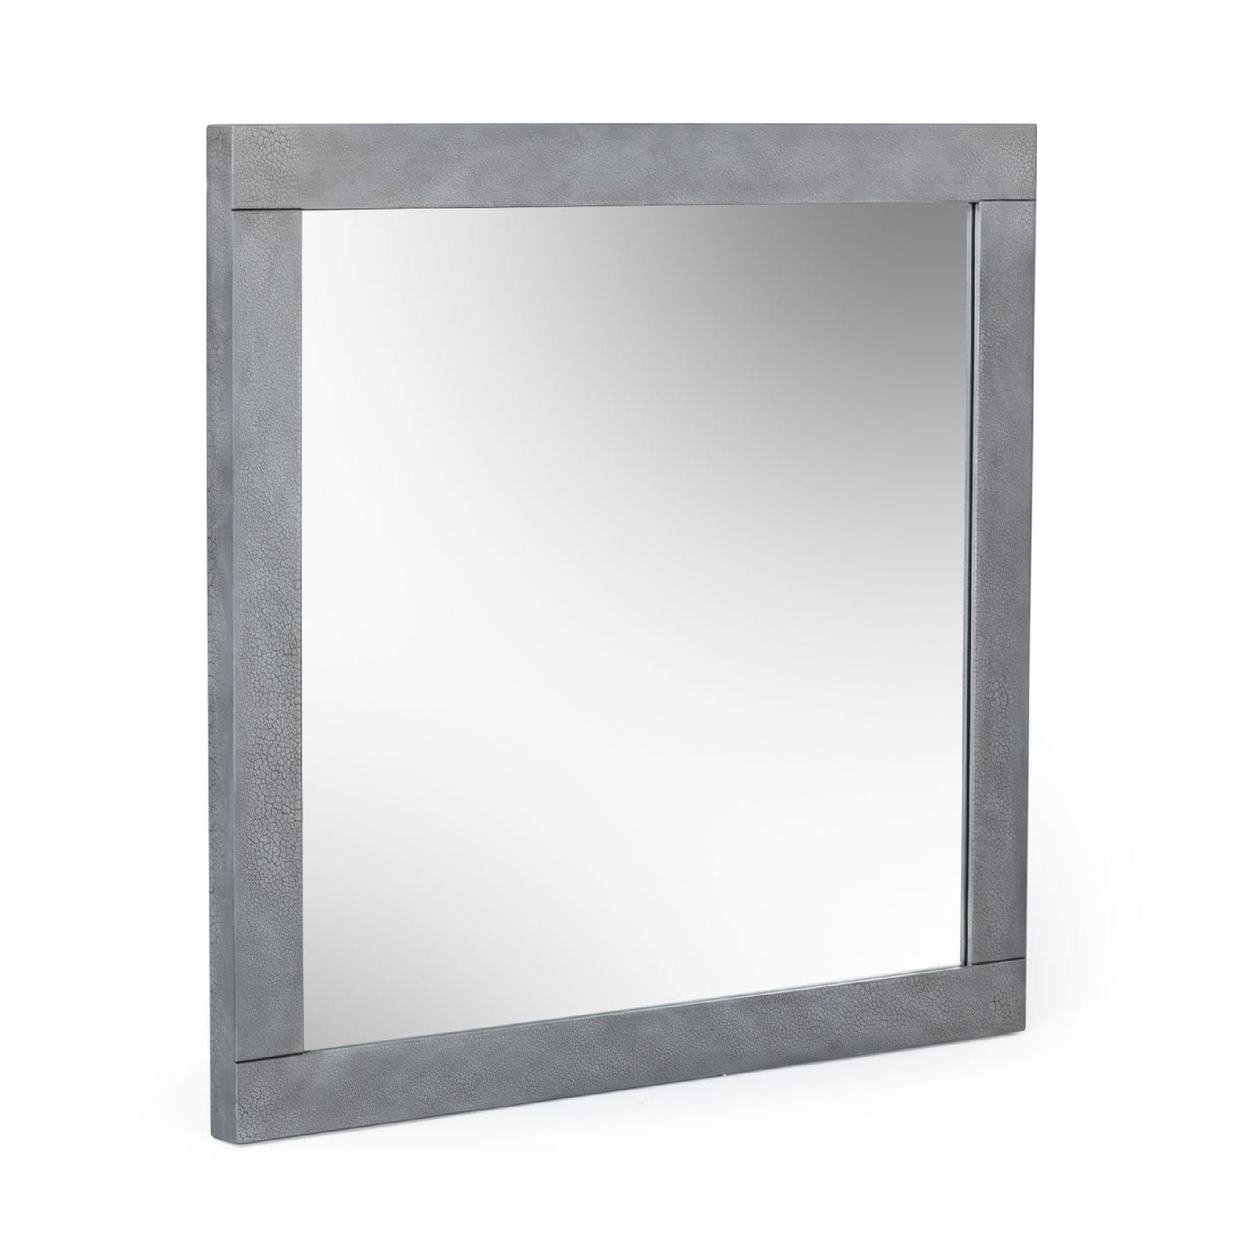 Cid Jely 35 Inch Hanging Rectangular Mirror, Smooth Gray Lacquer Finish- Saltoro Sherpi